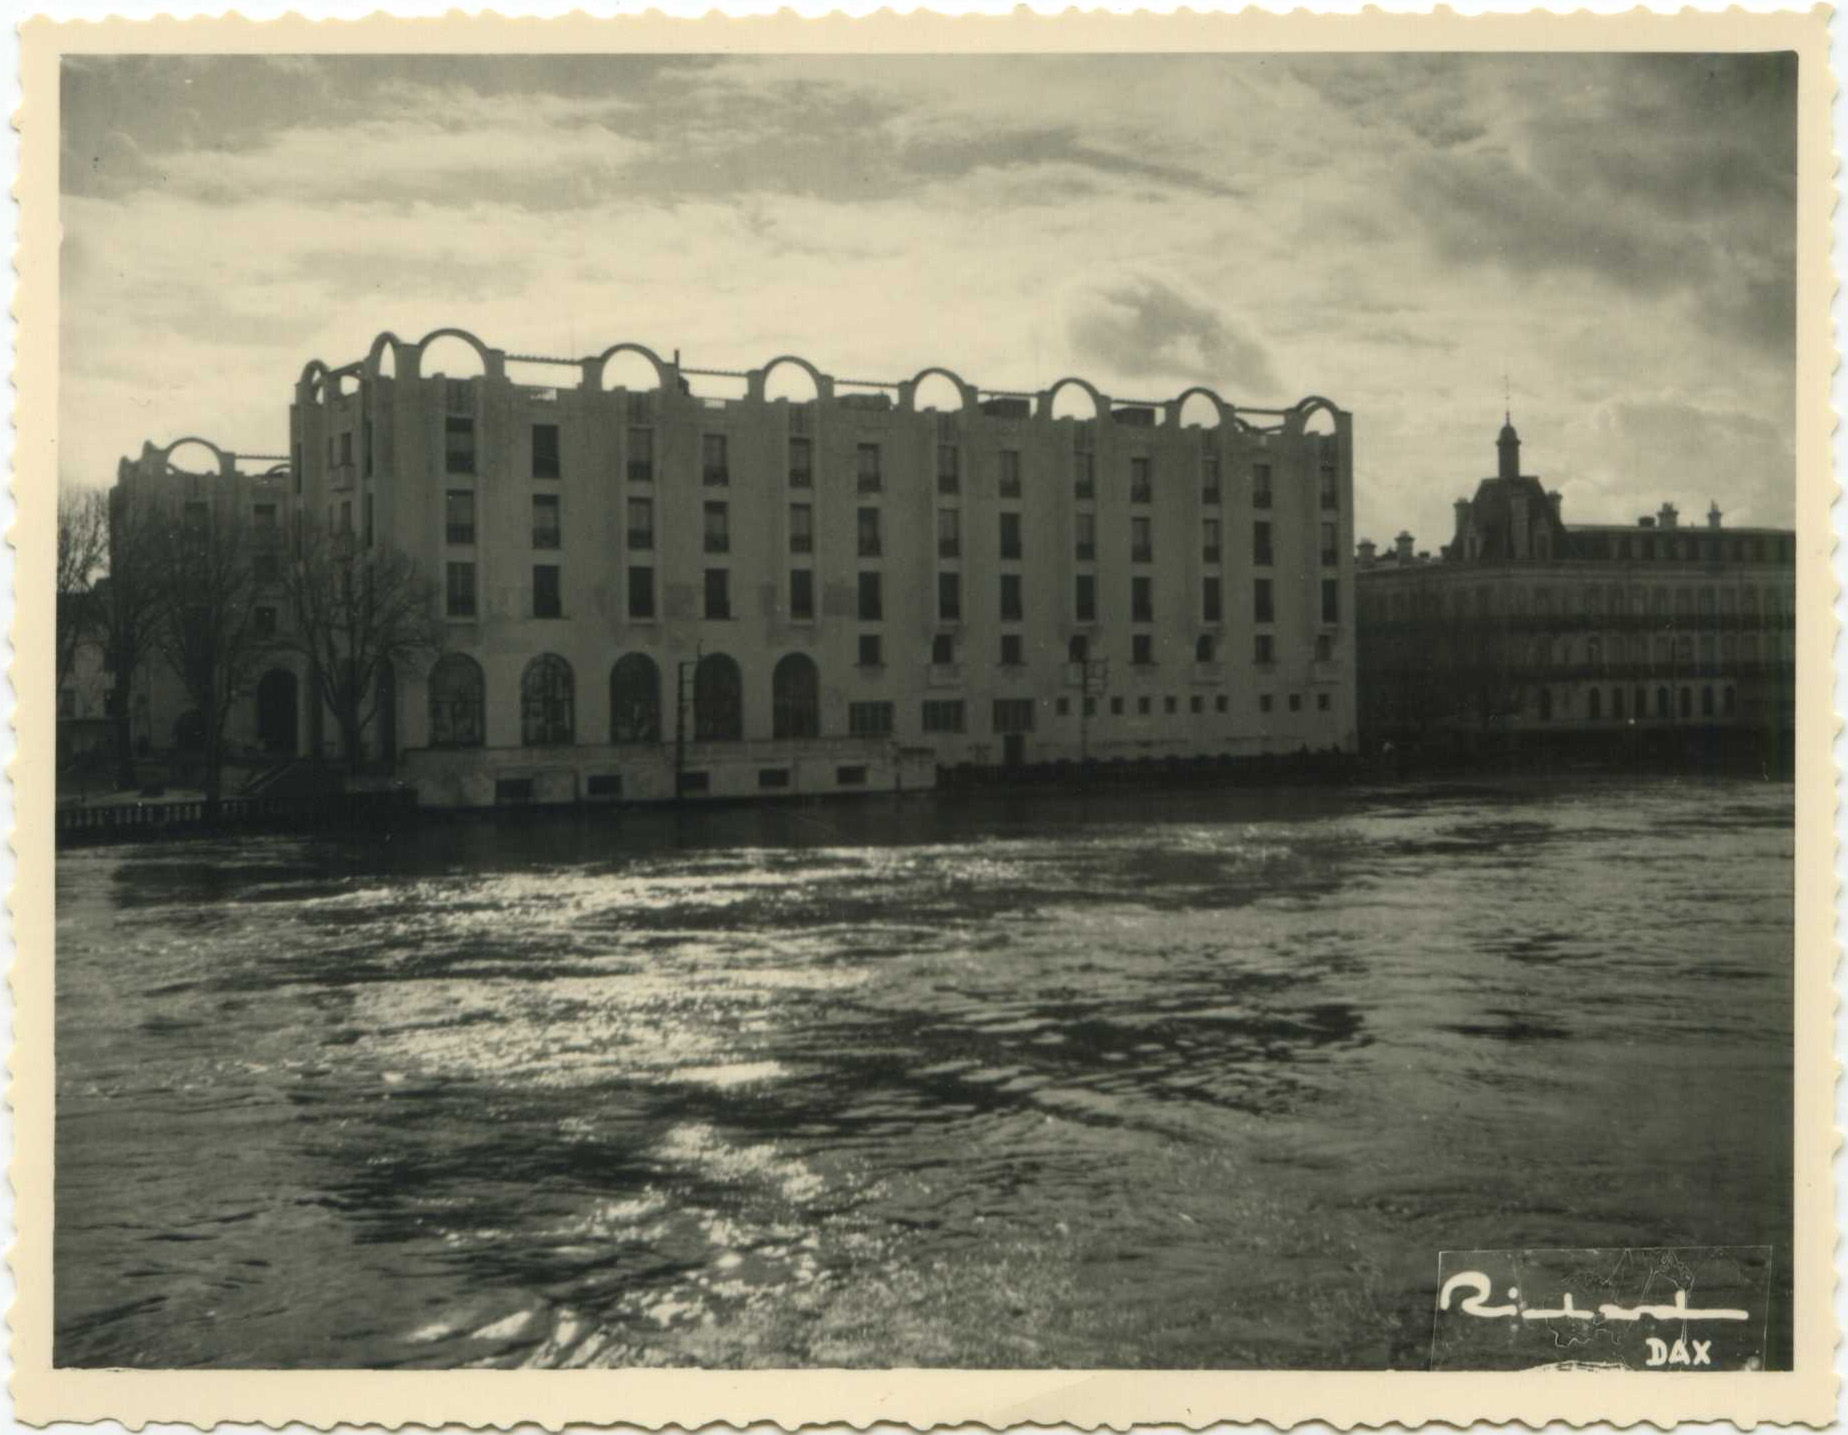 Dax - Photo - Crue de 1952 - Le Splendid Hôtel